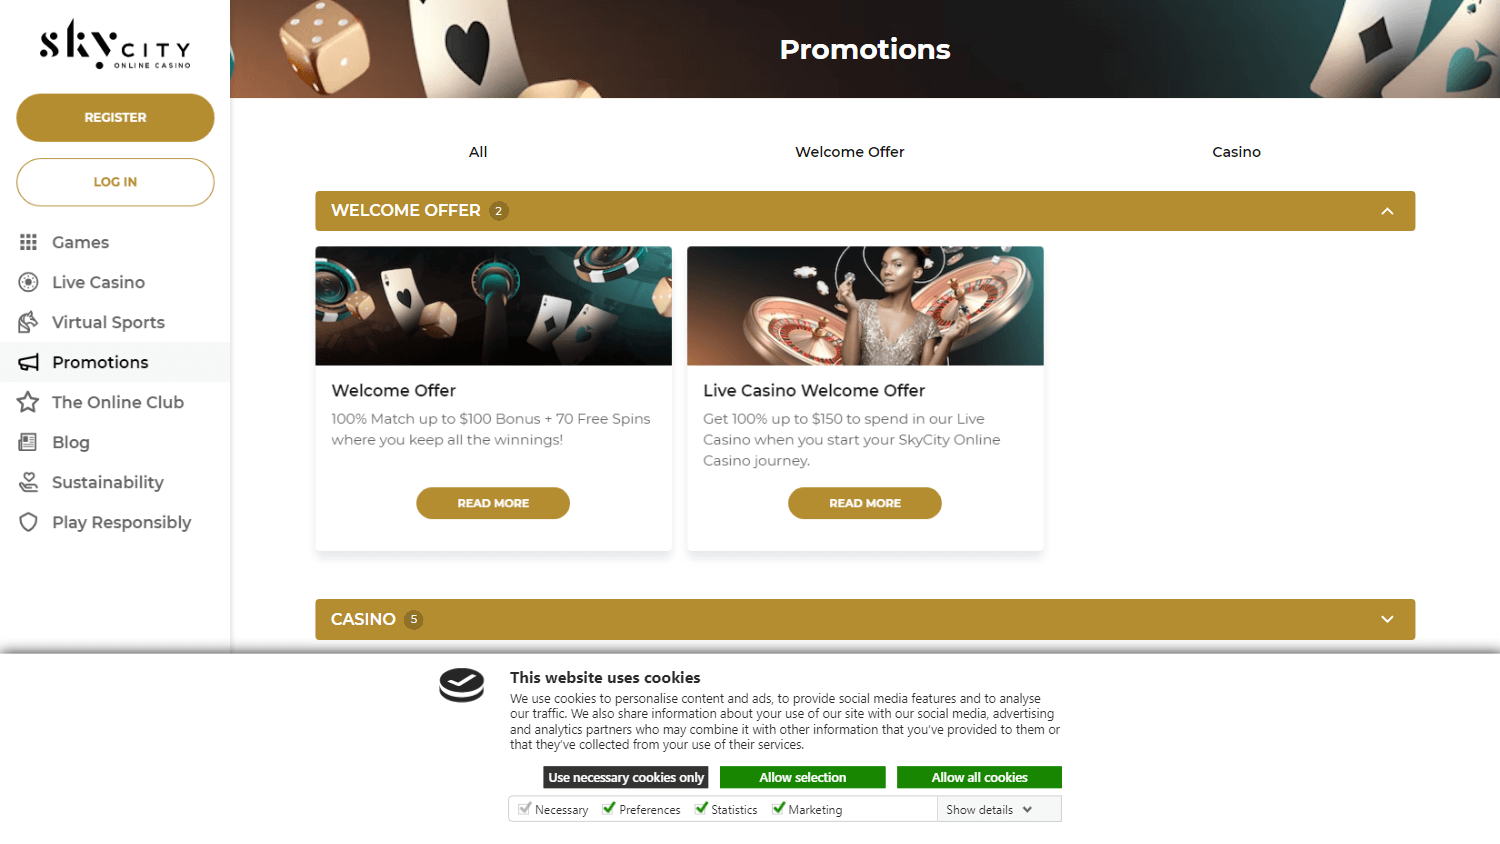 skycity_casino_promotions_desktop